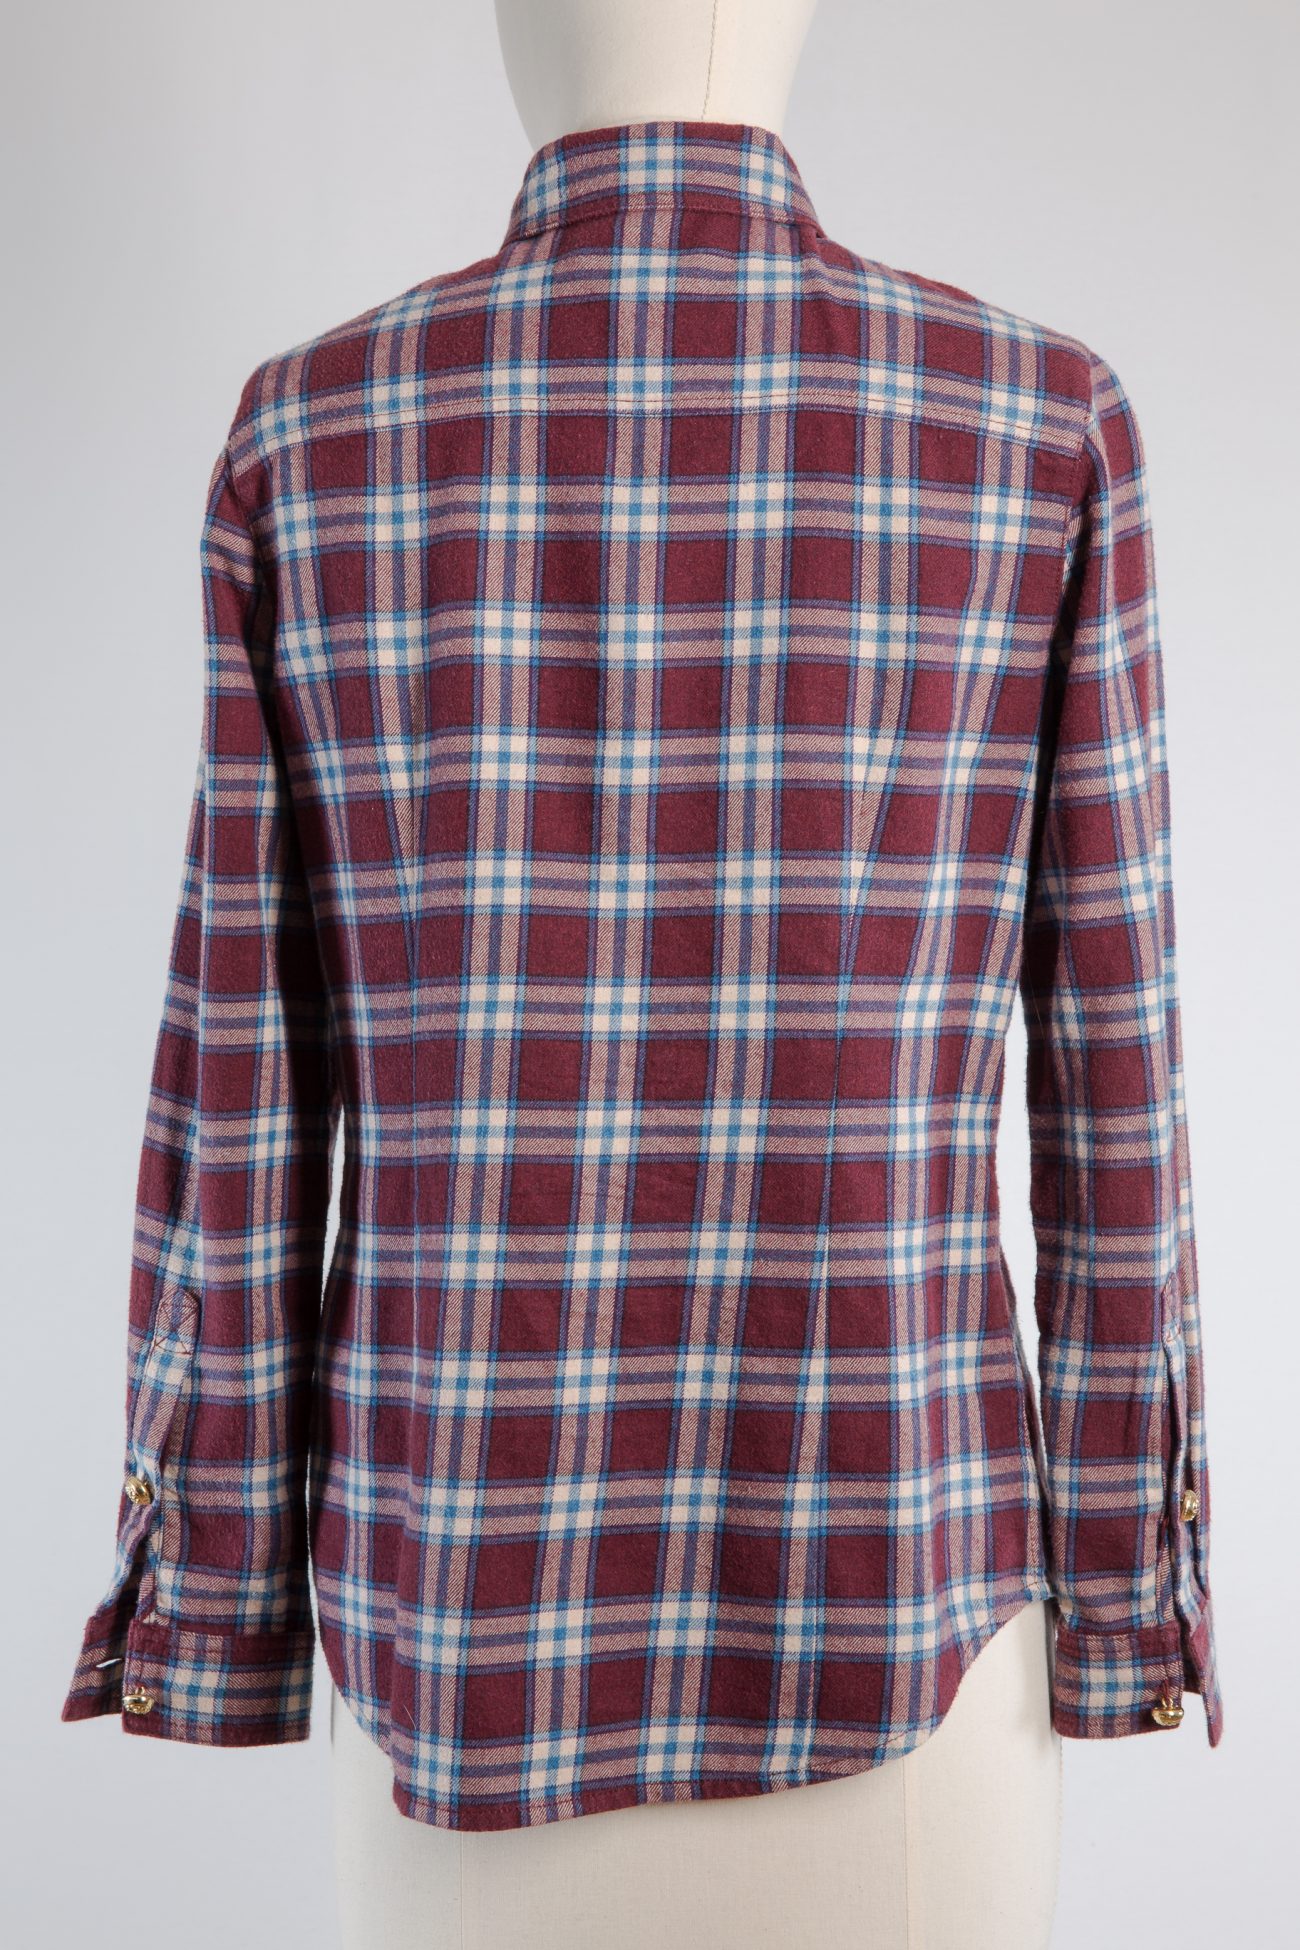 Burberry flannel shirt